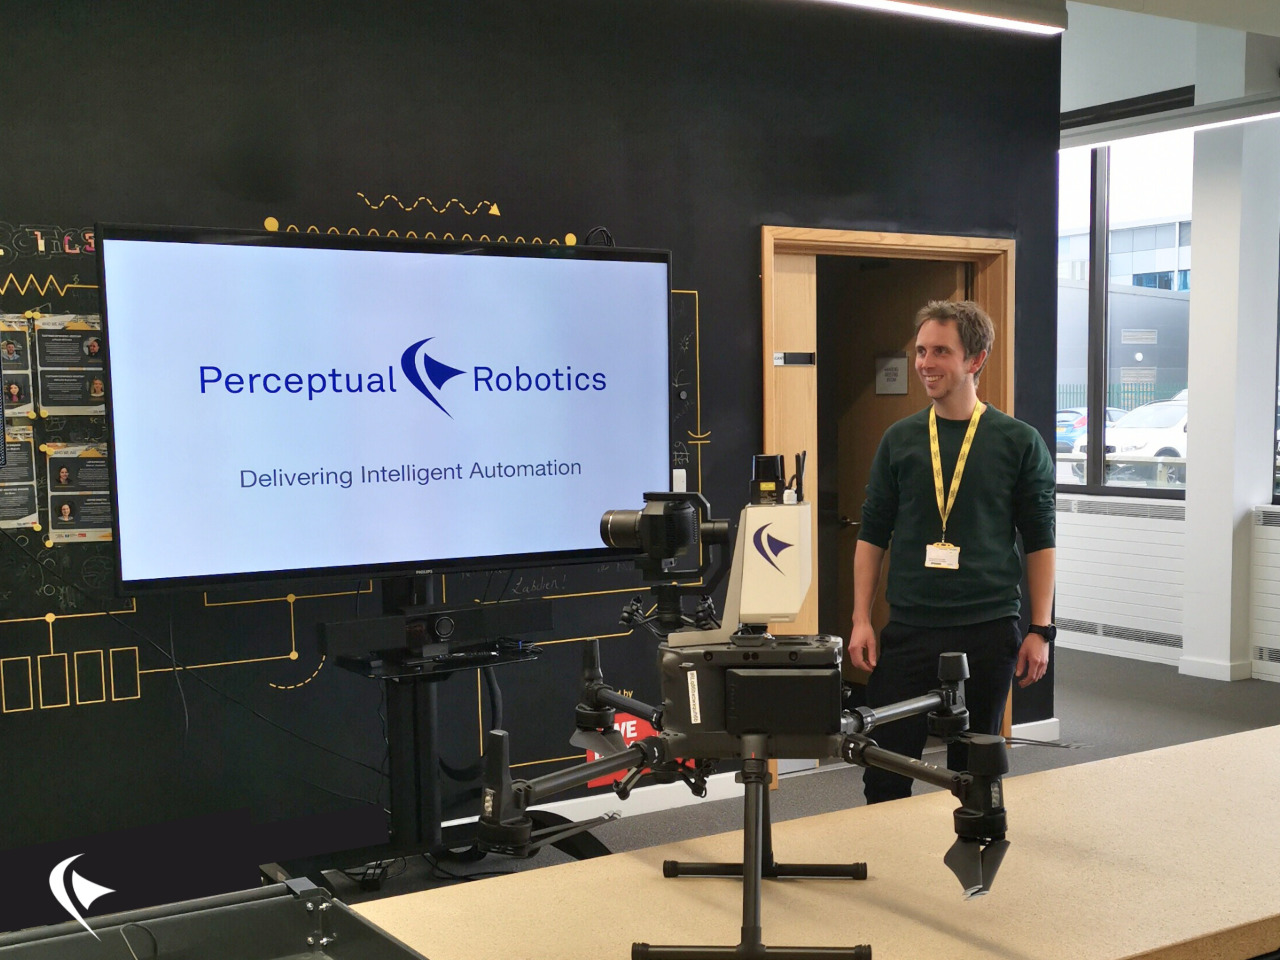 Chris standing with drone and Perceptual Robotics presentation